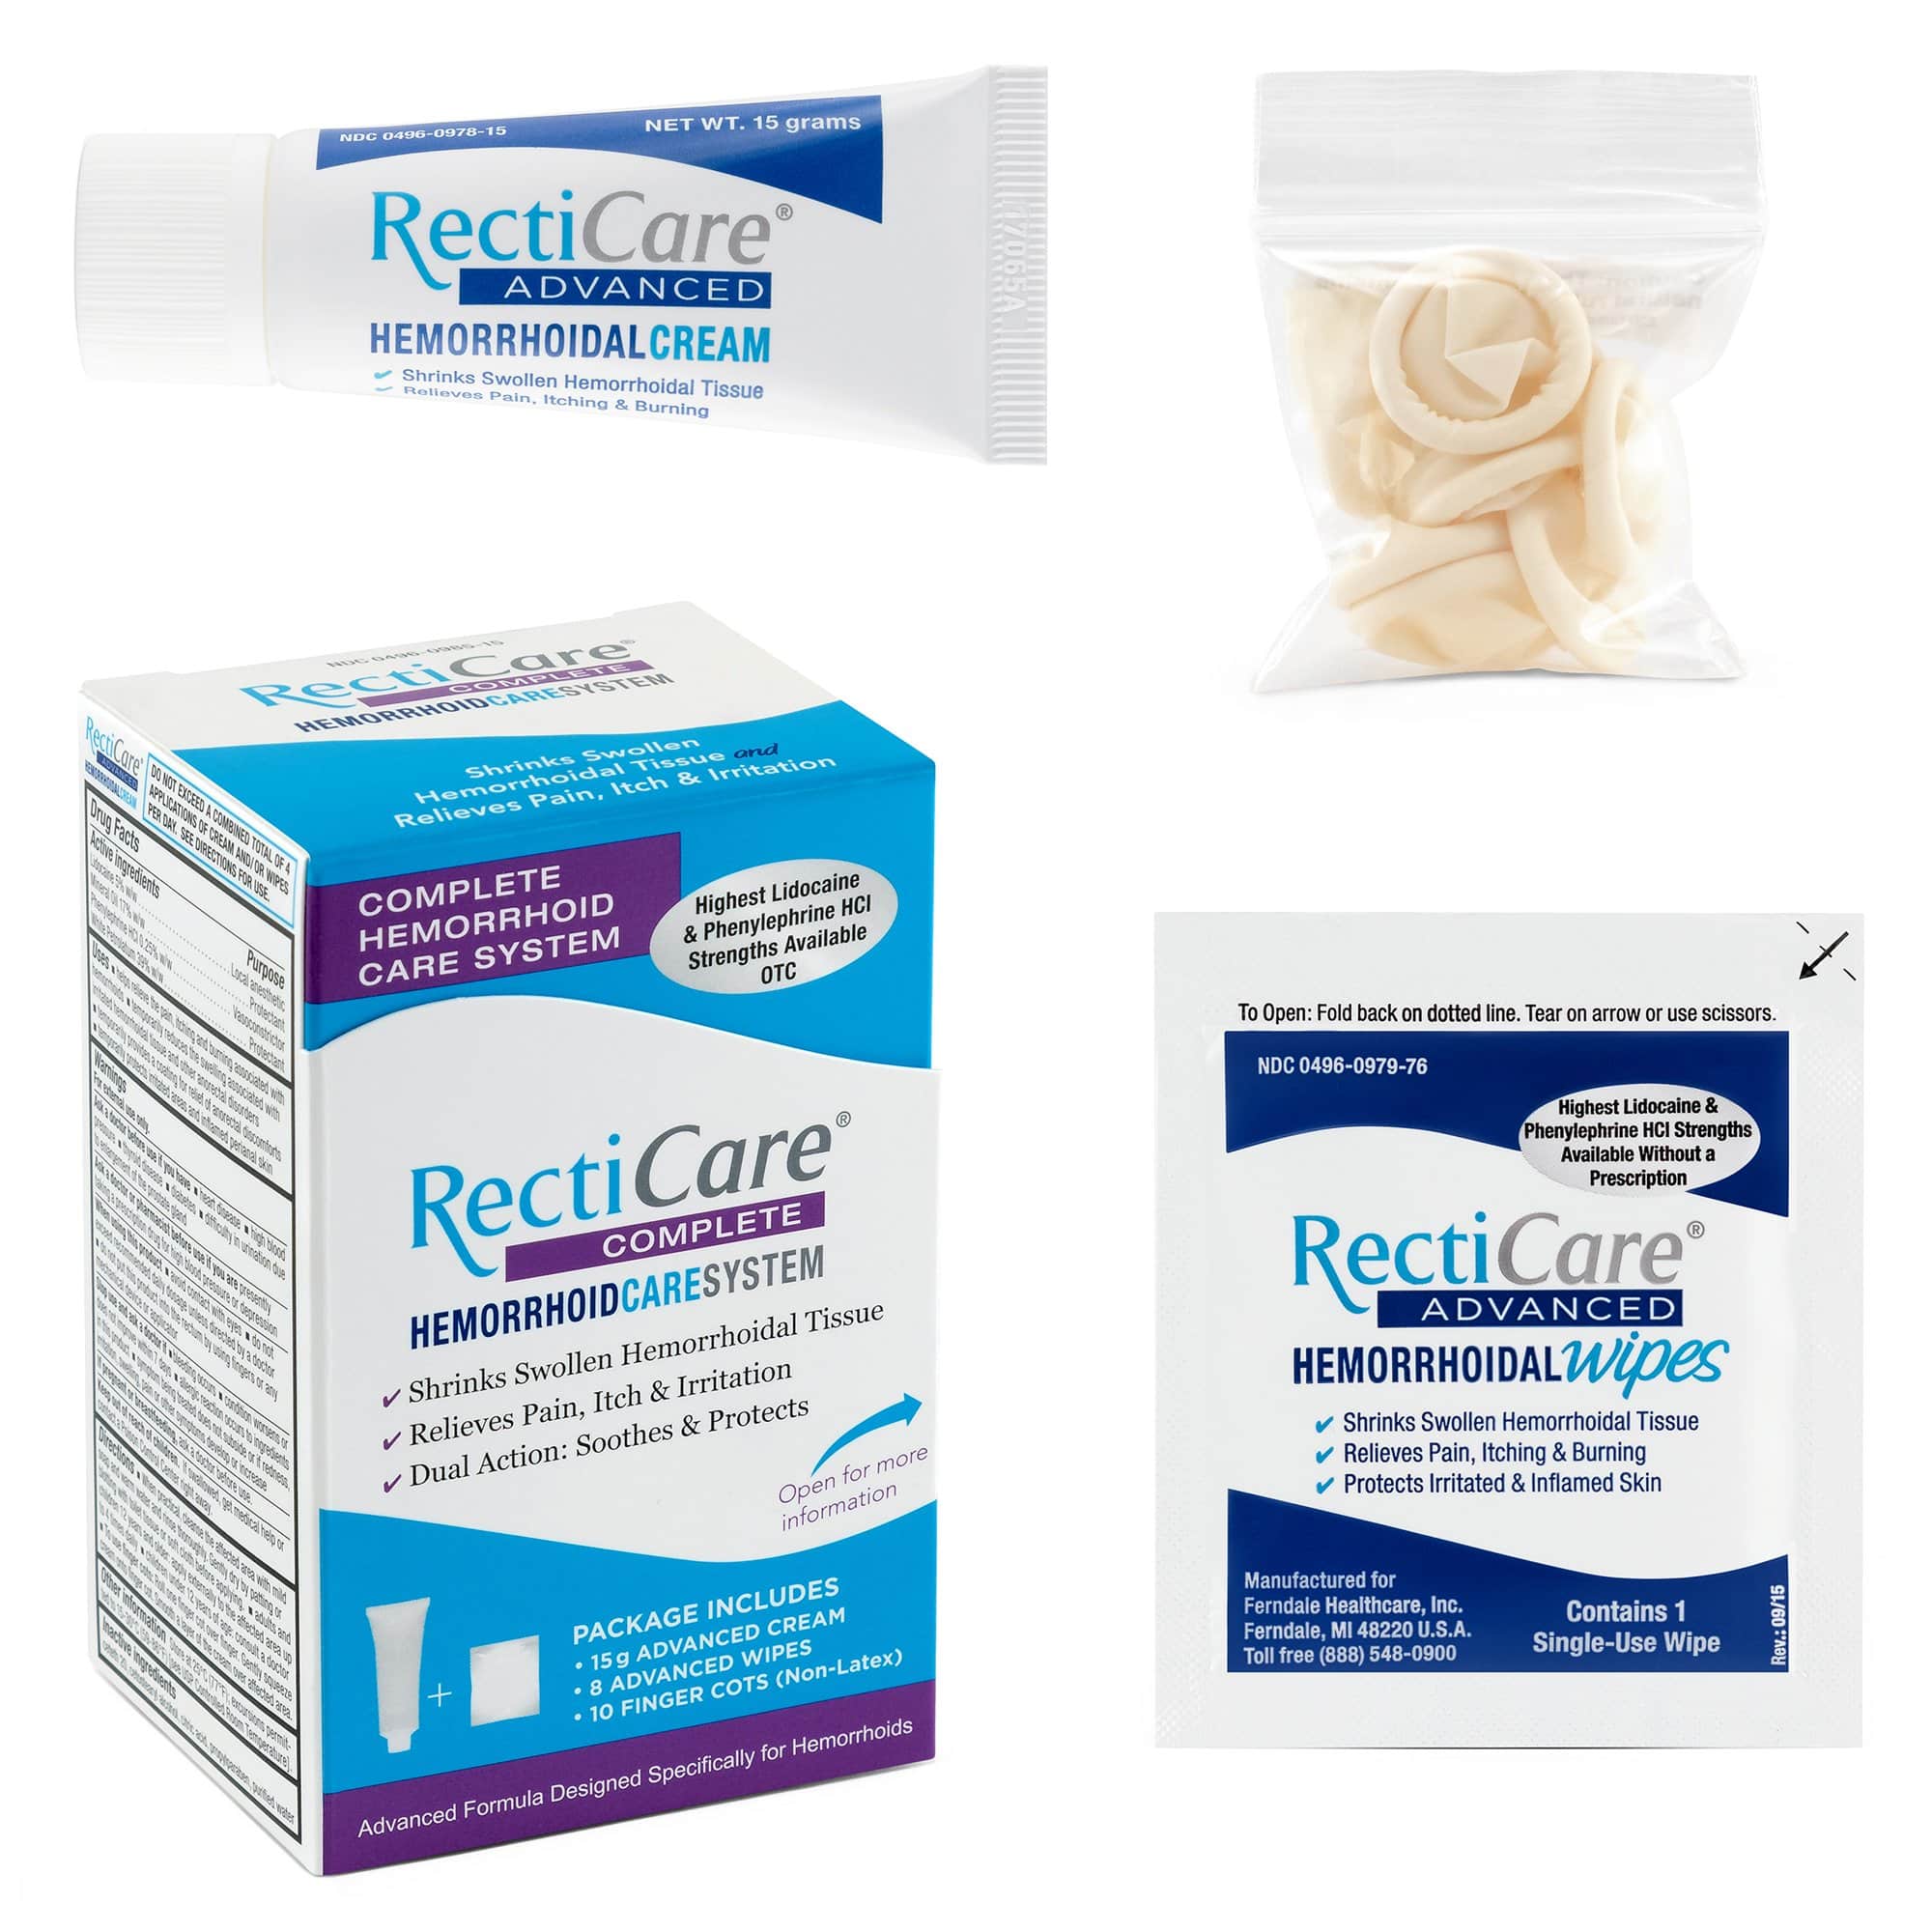 Amazon.com: RectiCare Advanced Hemorrhoidal Cream: Advanced Treatment ...